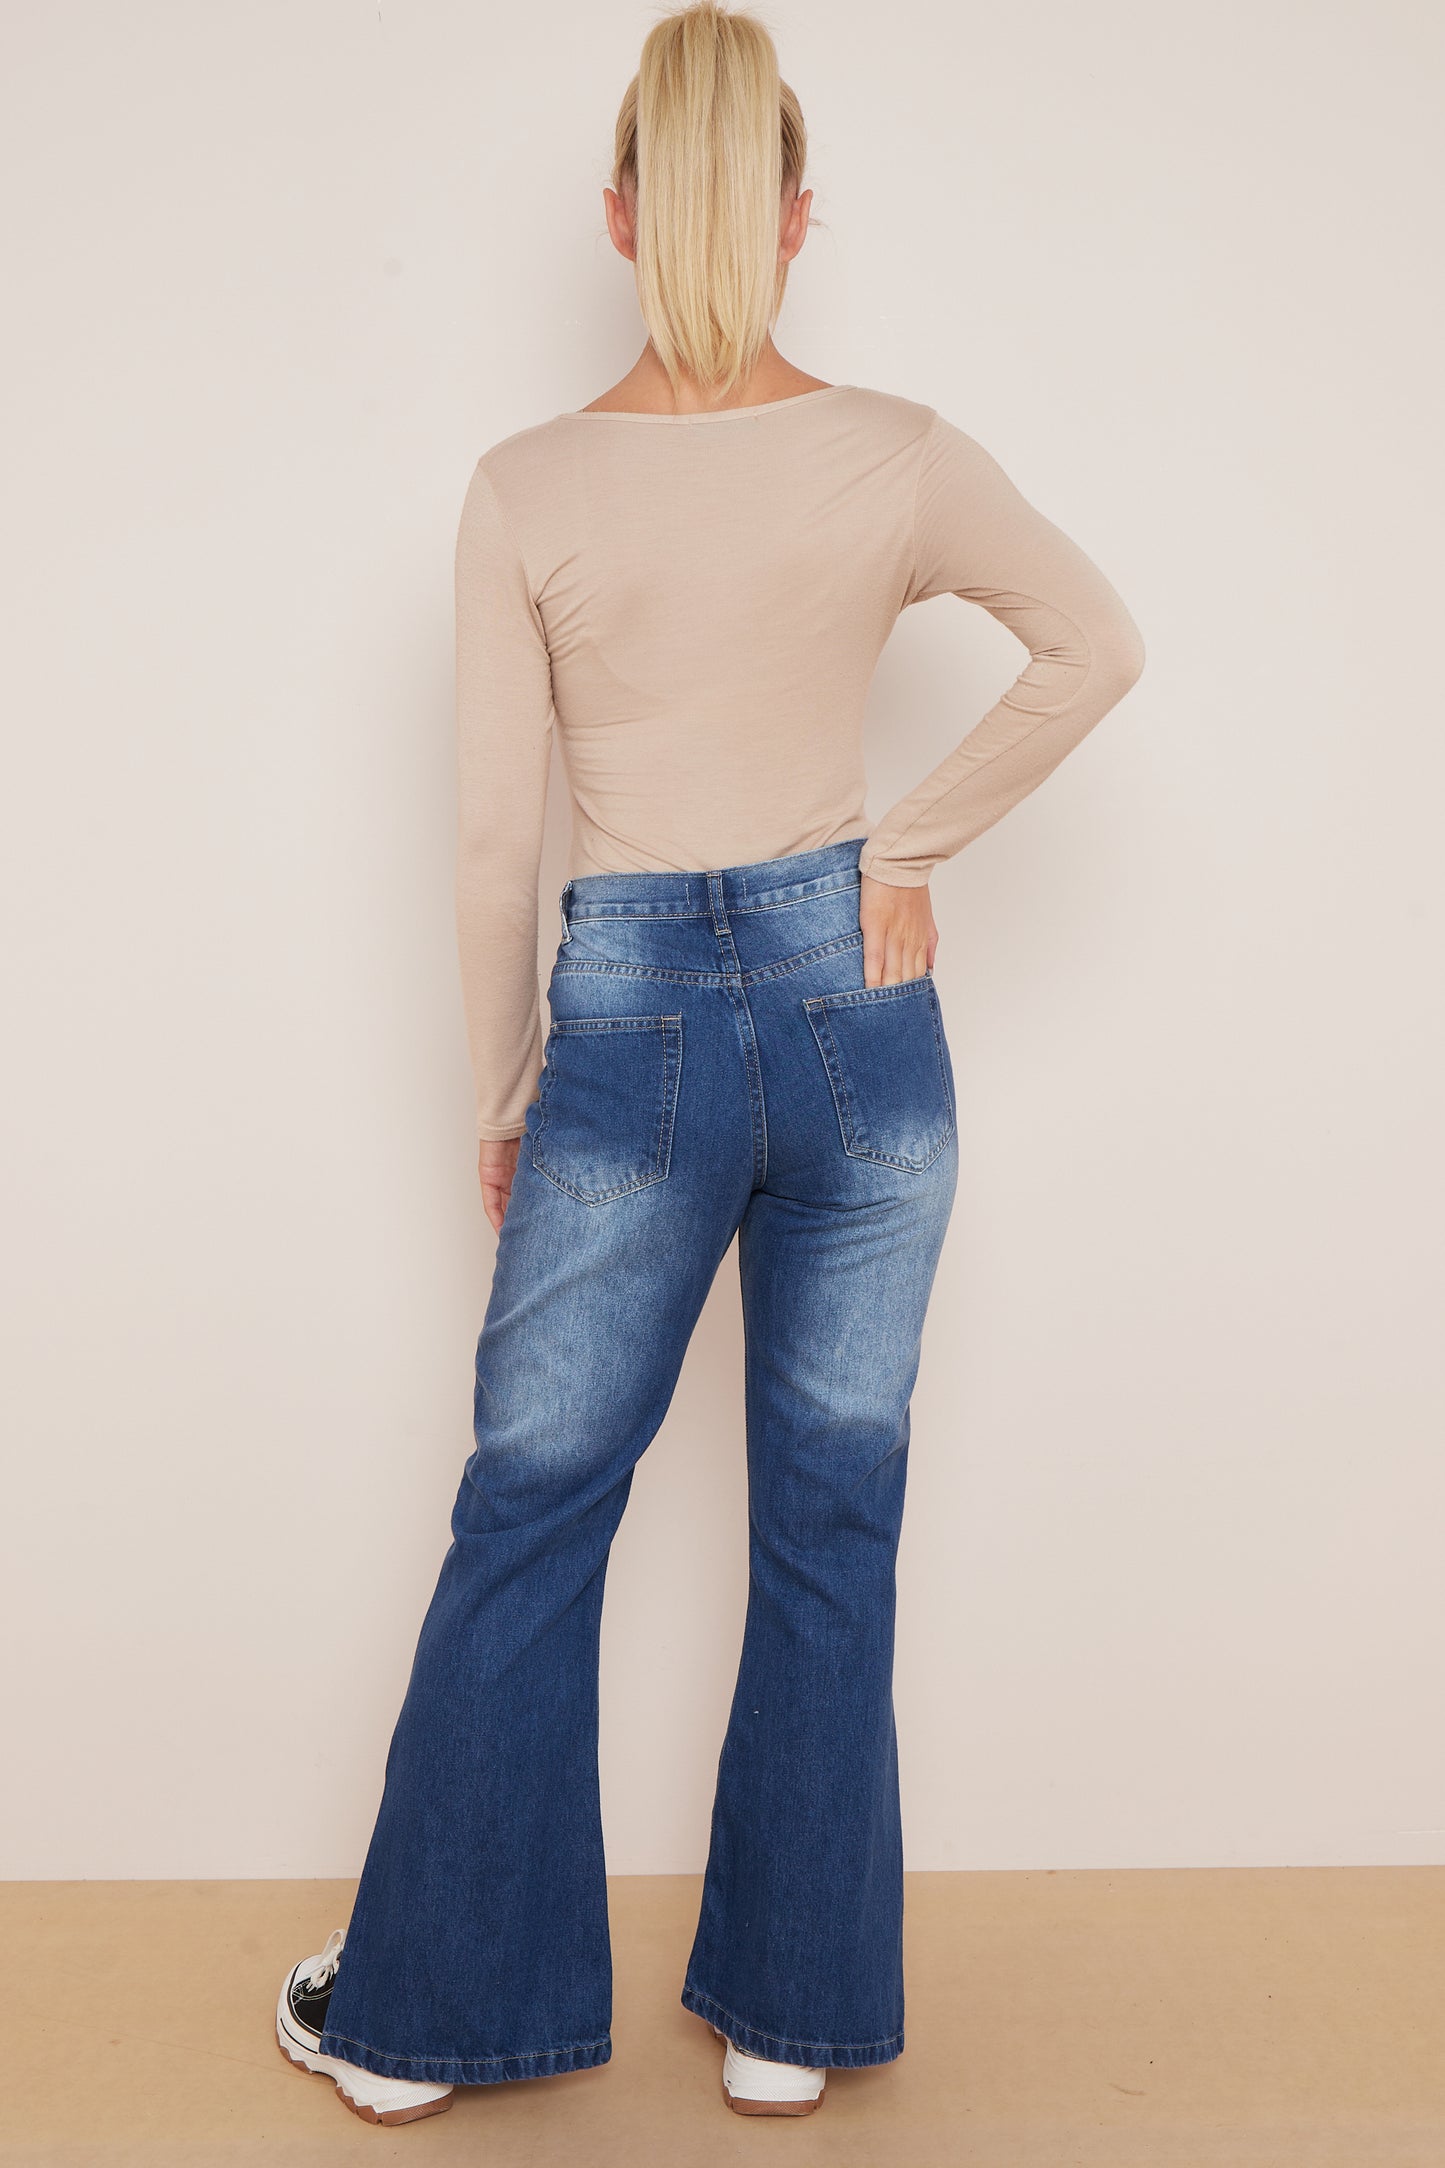 Classic Flare Cut Women's Jeans - Pack of 6 in Dark and Light Denim